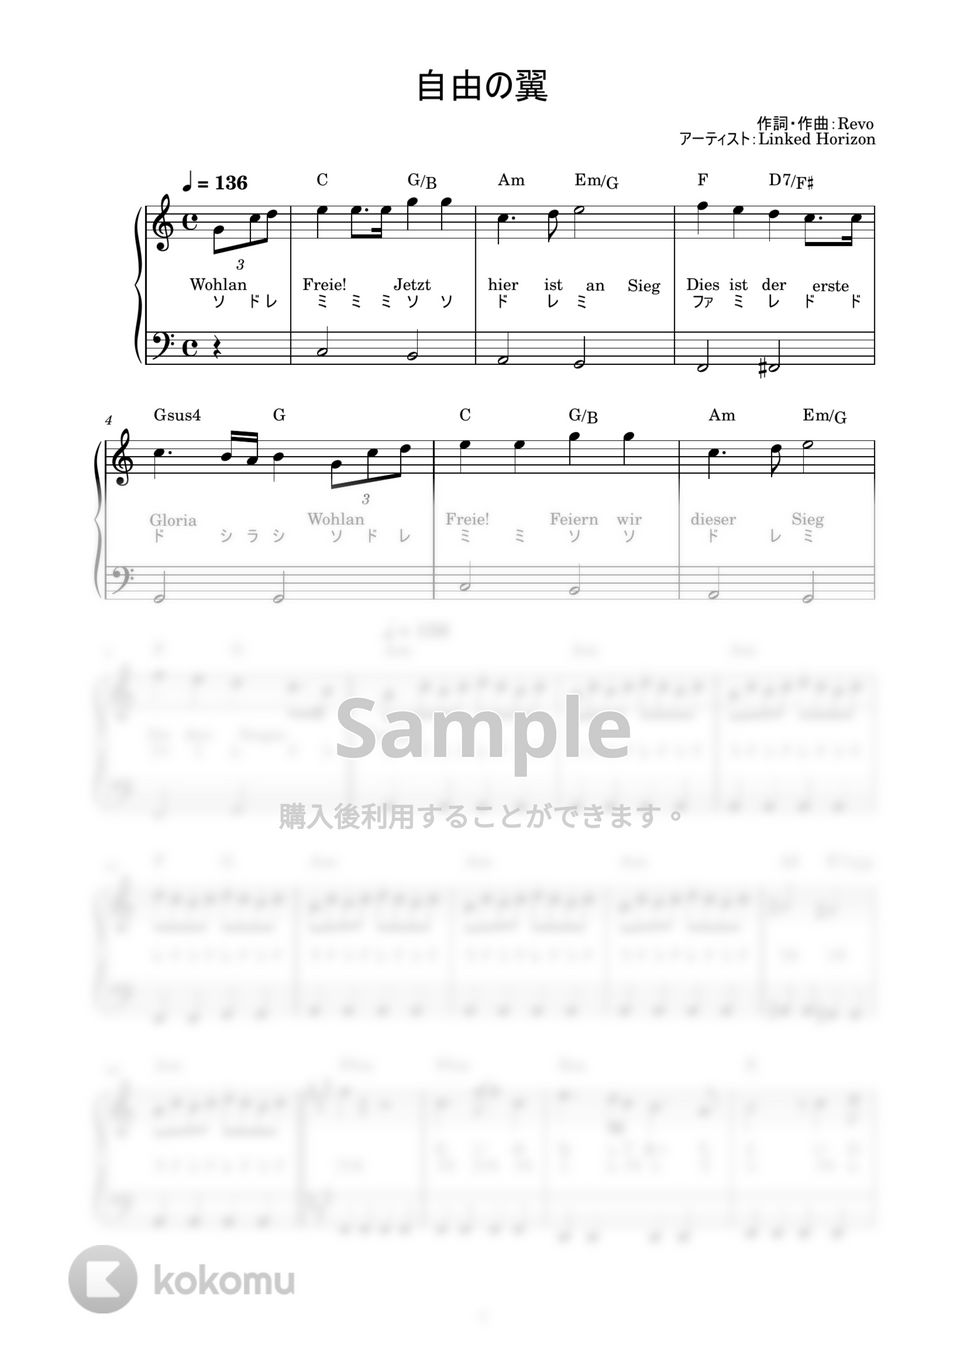 LINKED HORIZON - 自由の翼 (かんたん / 歌詞付き / ドレミ付き / 初心者) by piano.tokyo